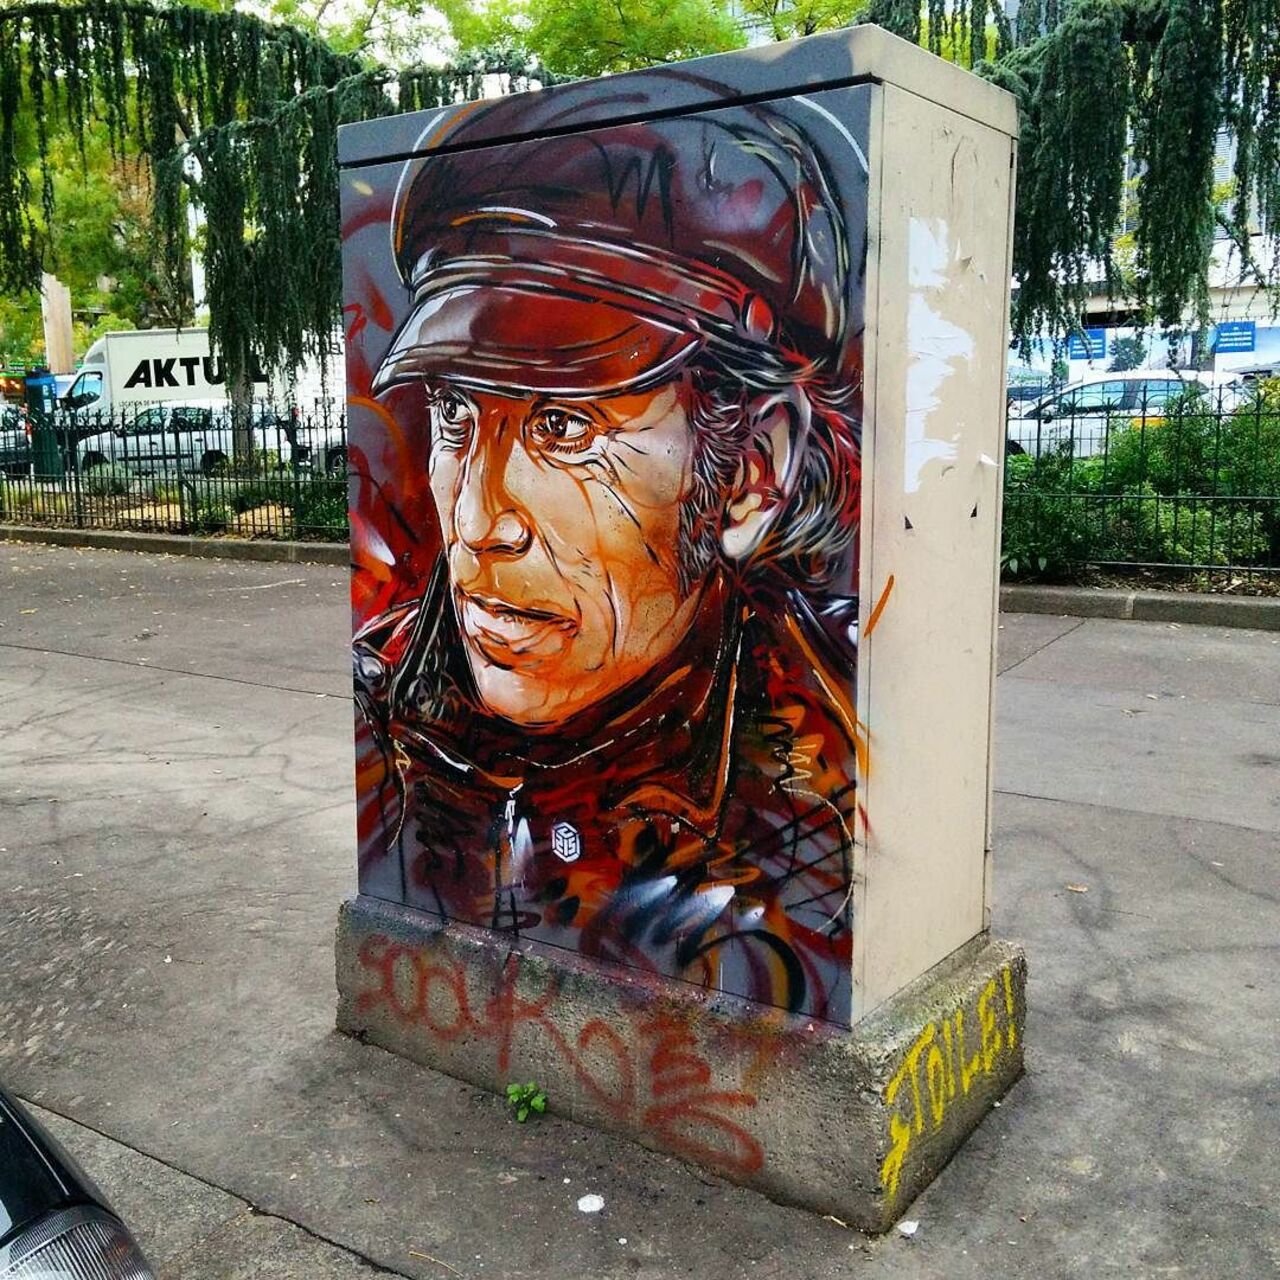 #Paris #graffiti photo by @ceky_art http://ift.tt/1XnVpob #StreetArt https://t.co/gW9TWEIcFF